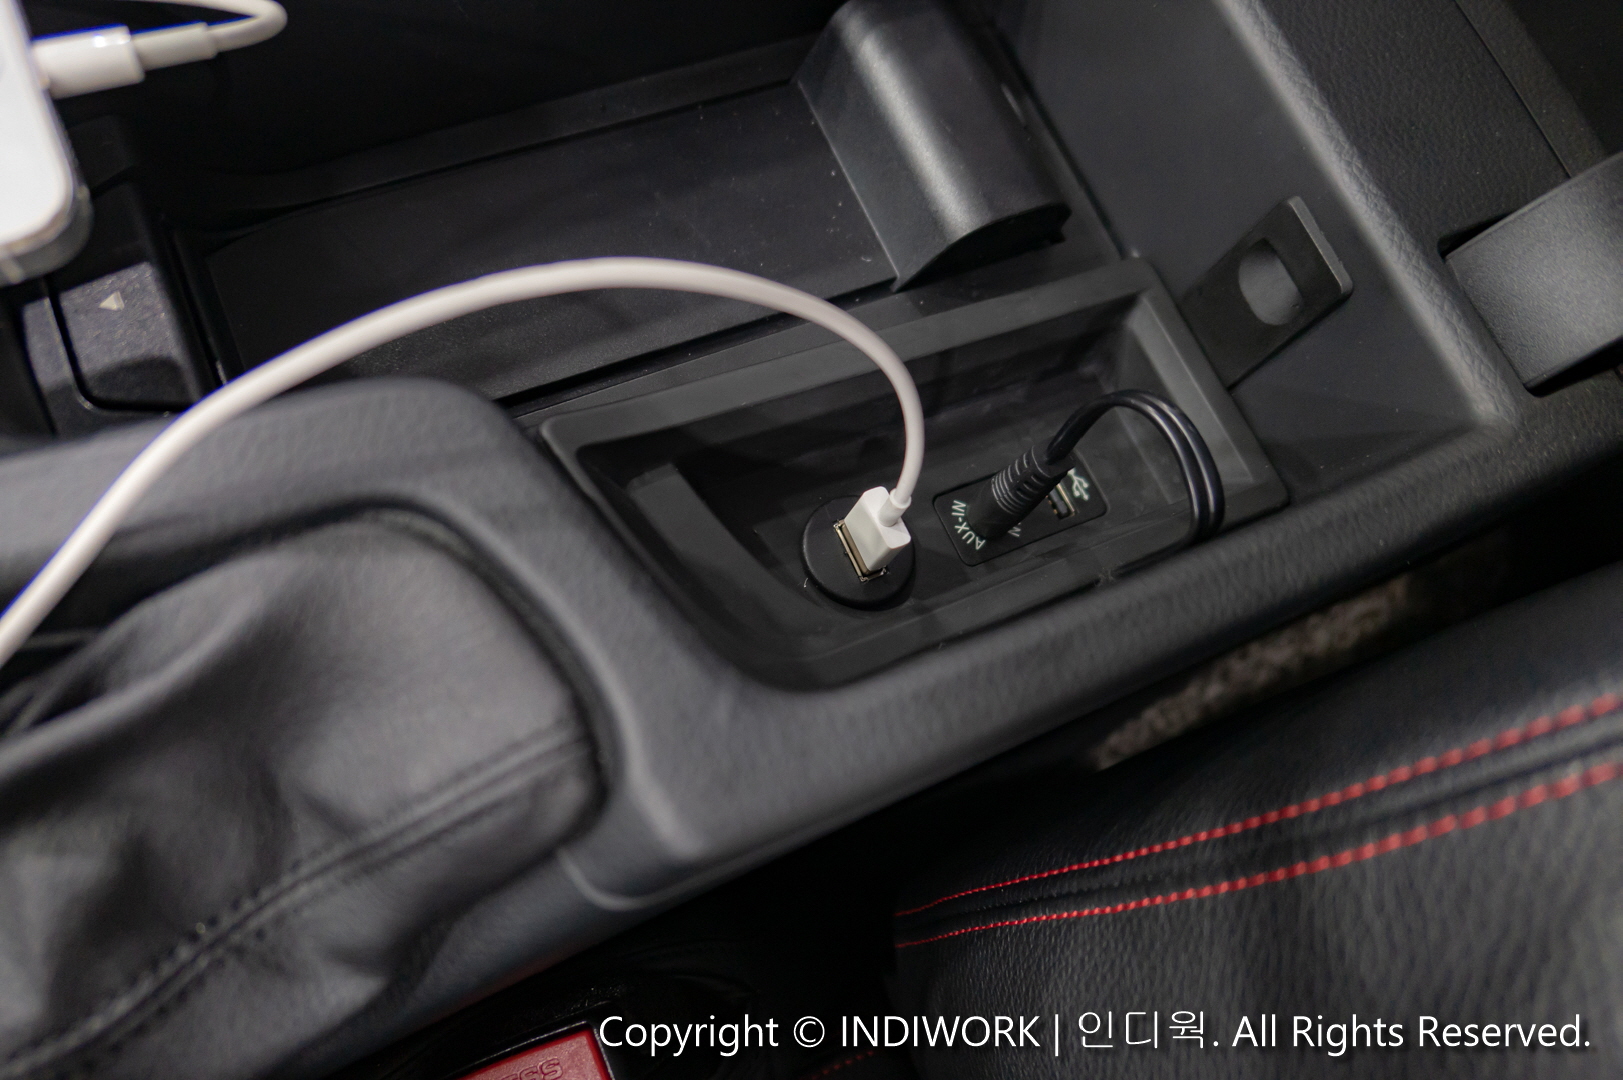 Apple Carplay, Google Android Auto,USB port for BMW F30 "SCB-NBT"